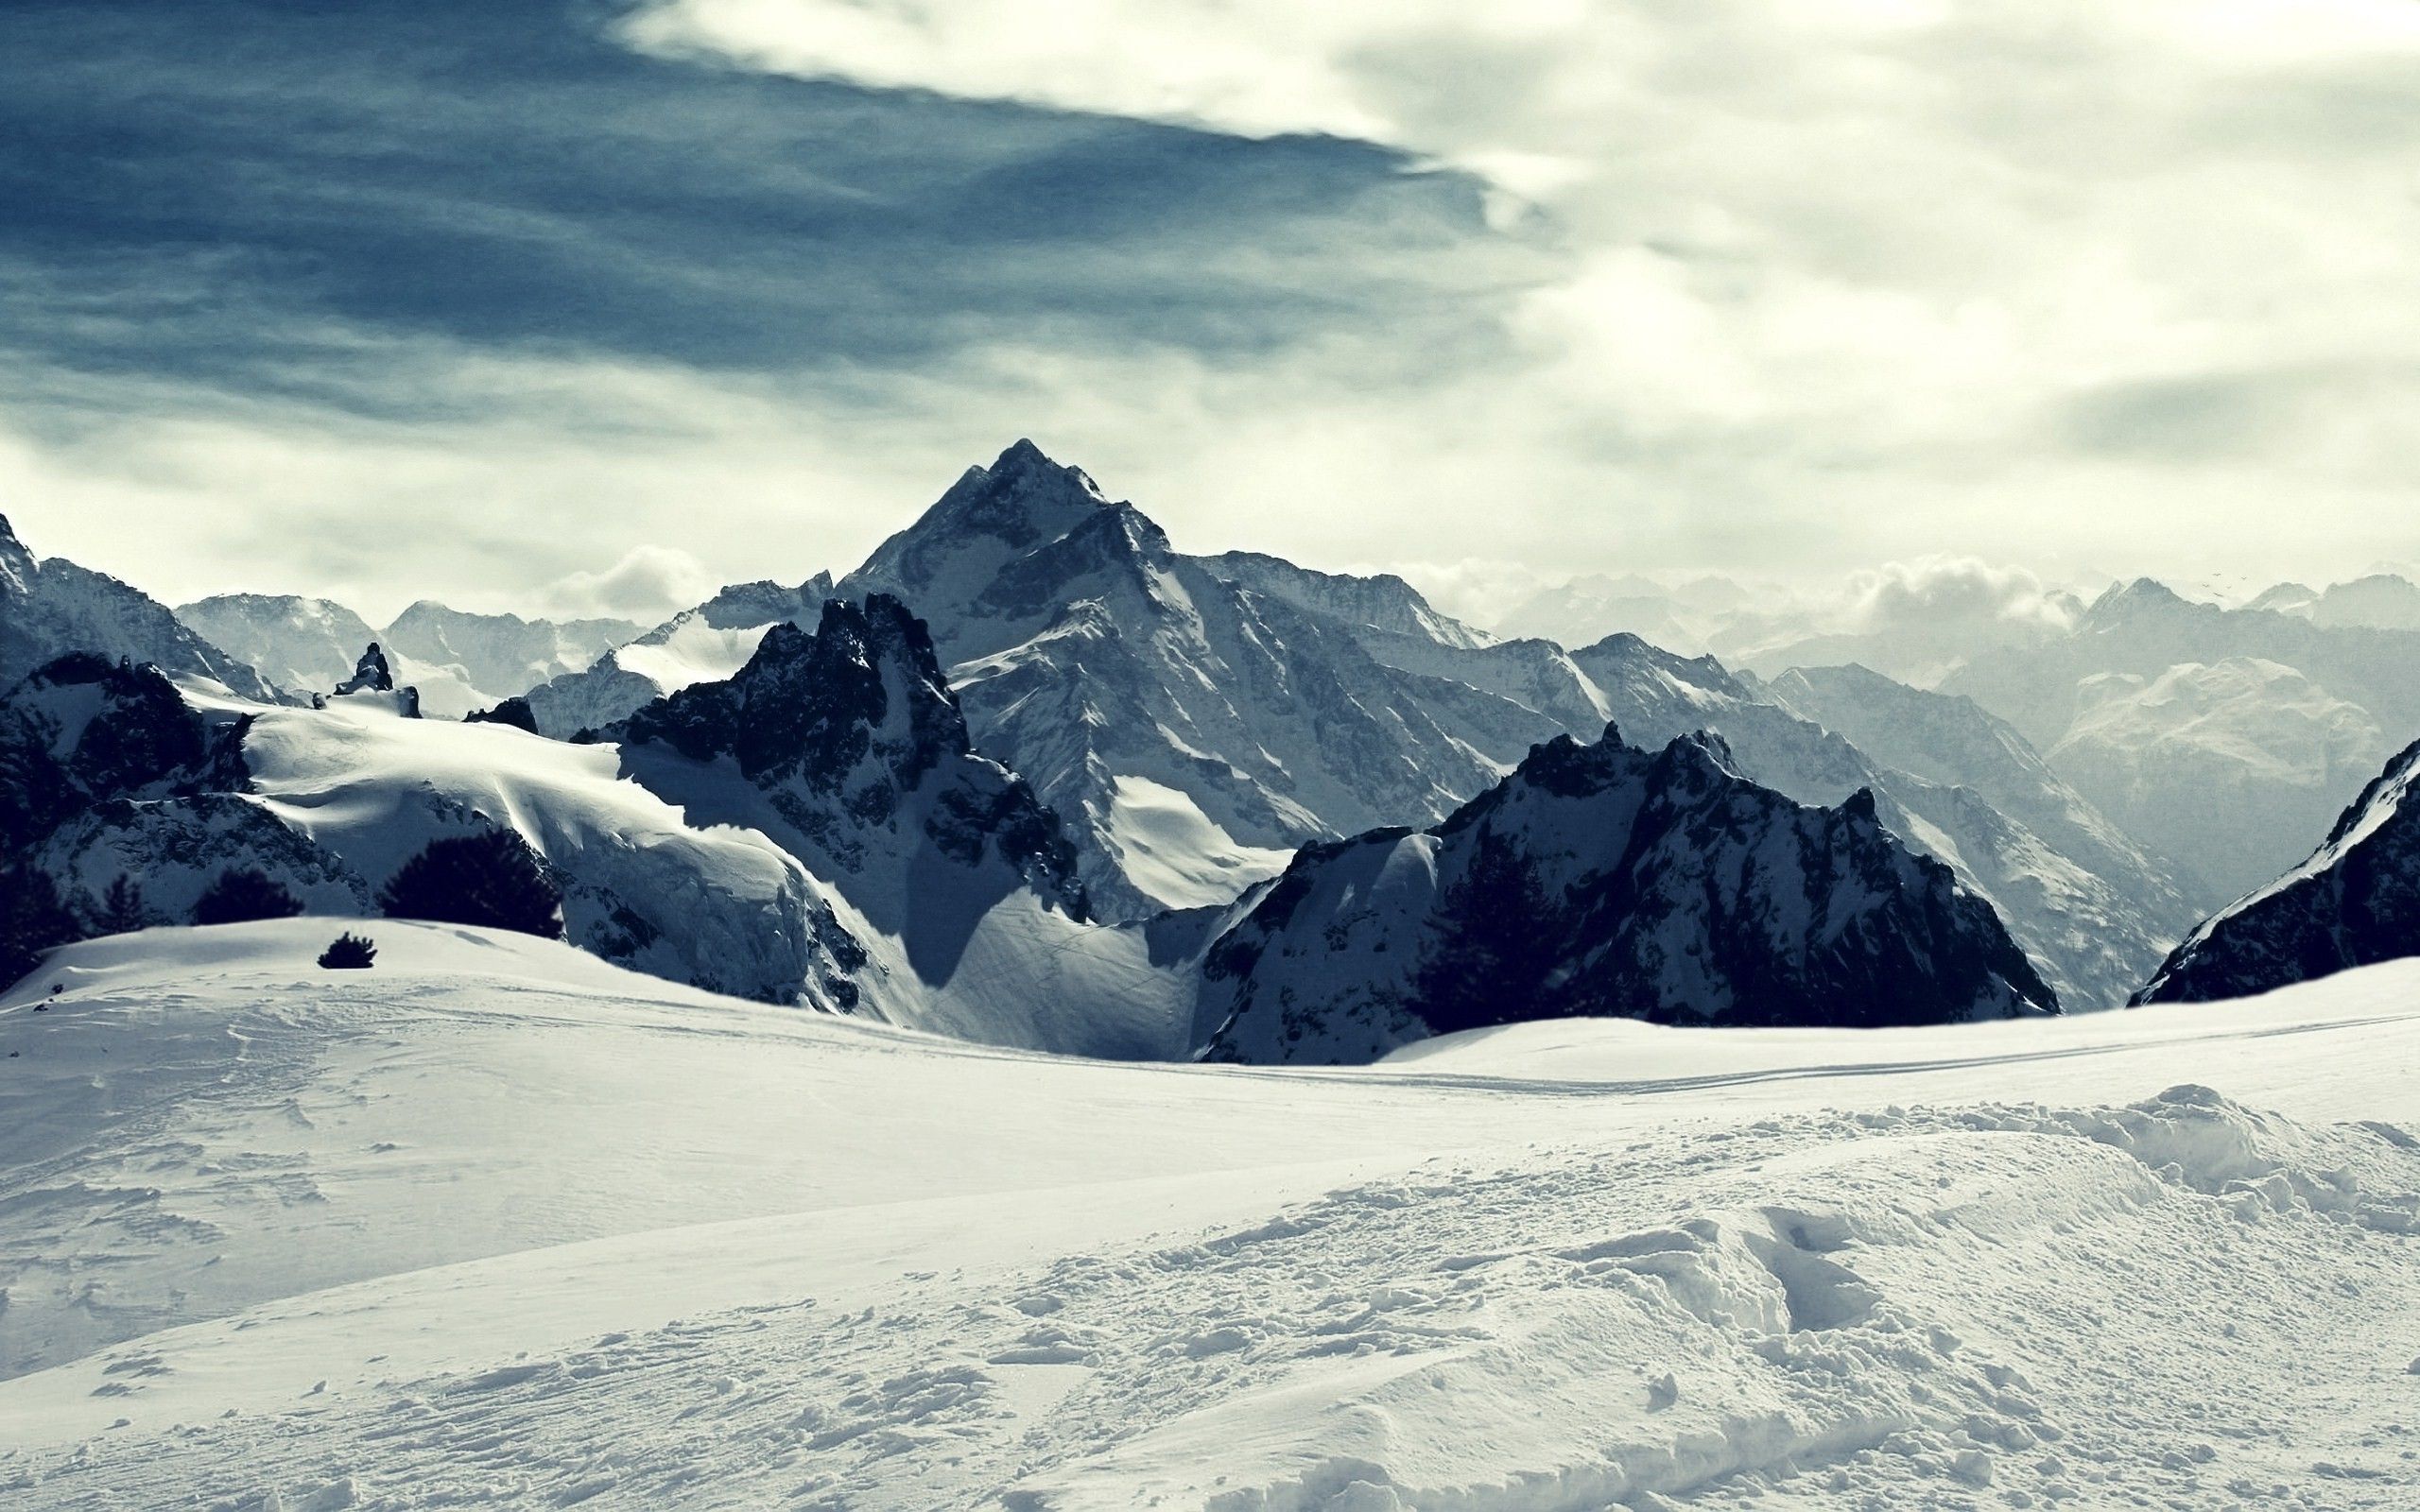  Berge Hintergrundbild 2560x1600. Berge Schnee & Trails Hintergrundbilder. Berge Schnee & Trails frei fotos